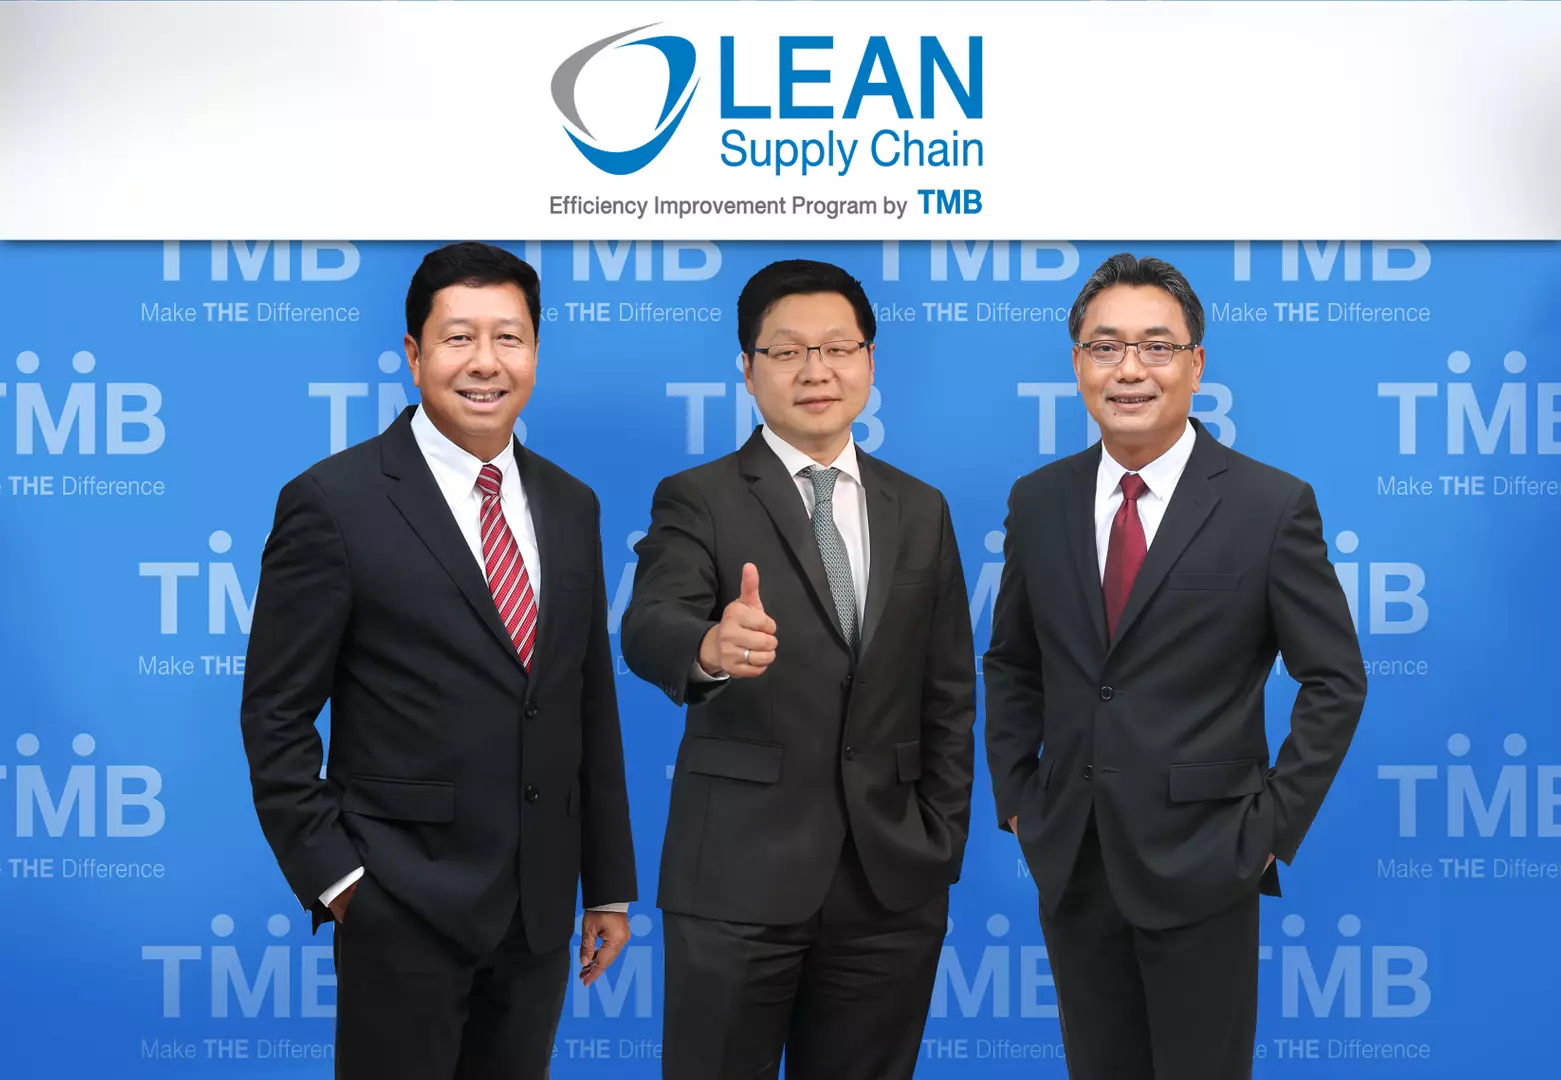 Lean Supply Chain by TMB